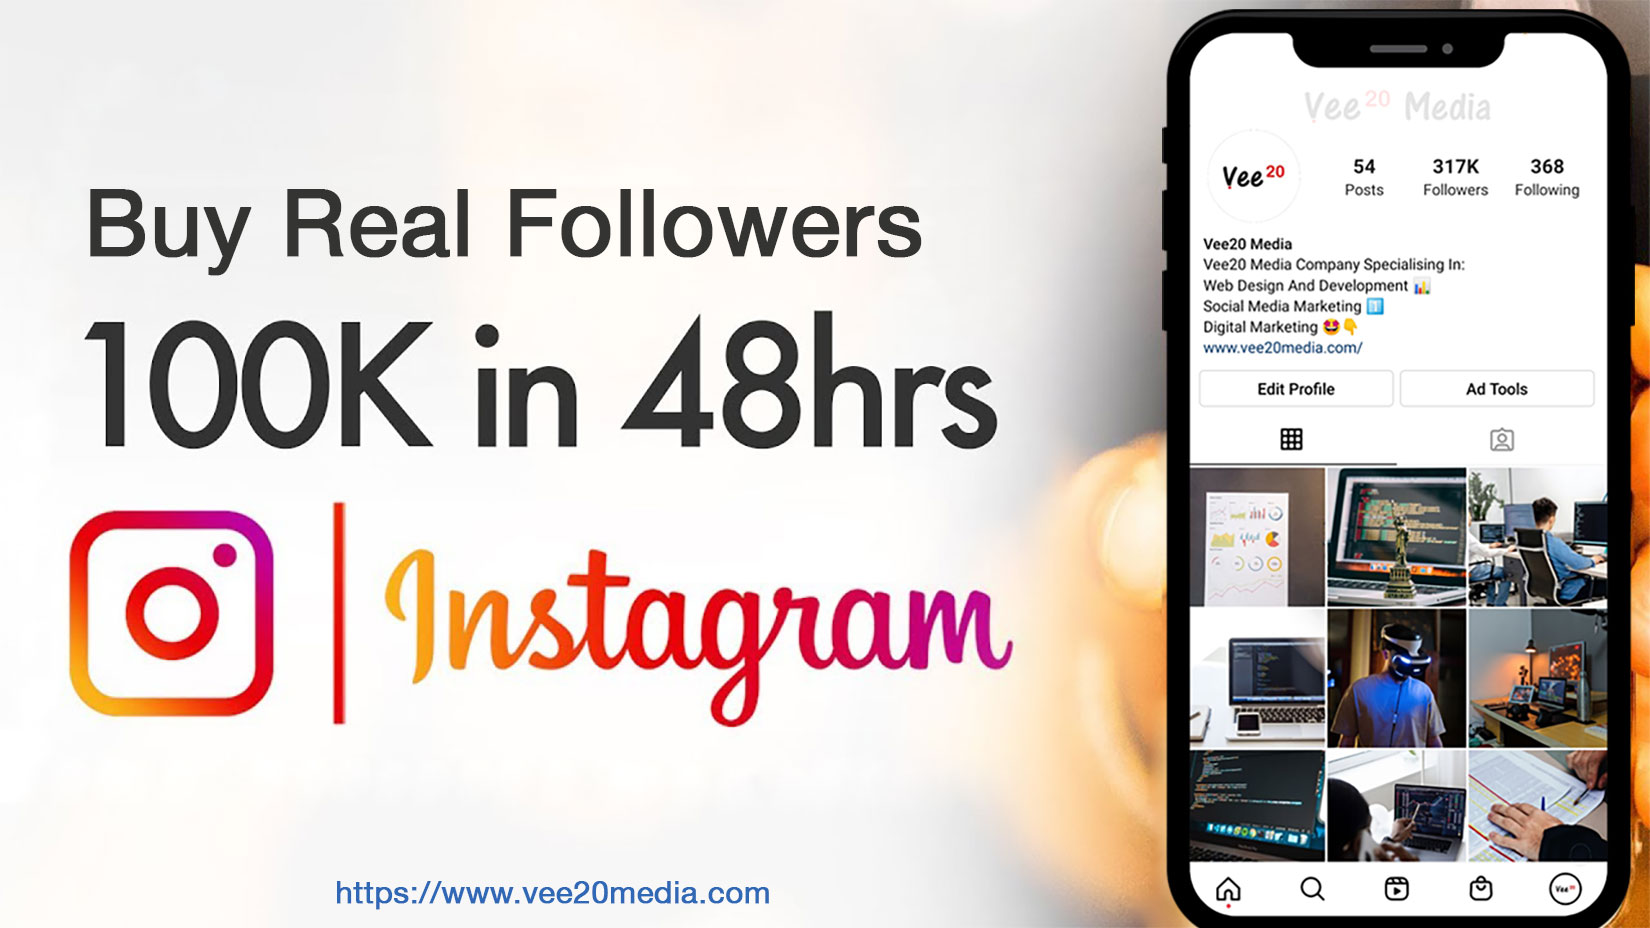 Where To Buy Instagram Followers Online - Vee20 Media P_2145bktsu1